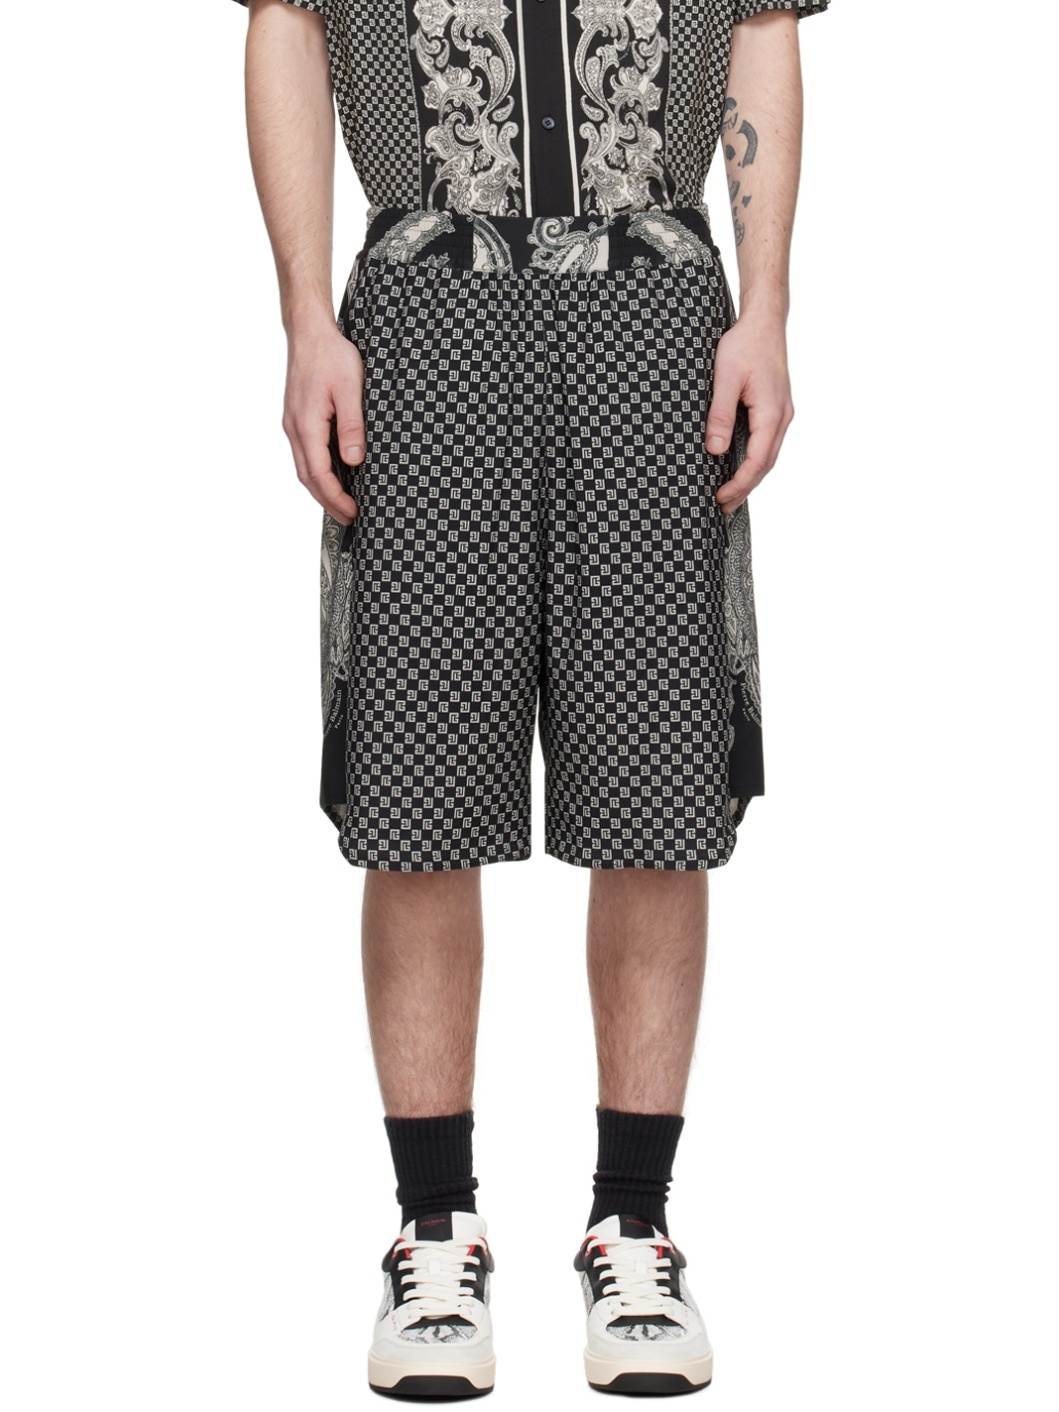 Black & Off-White Printed Shorts - 1